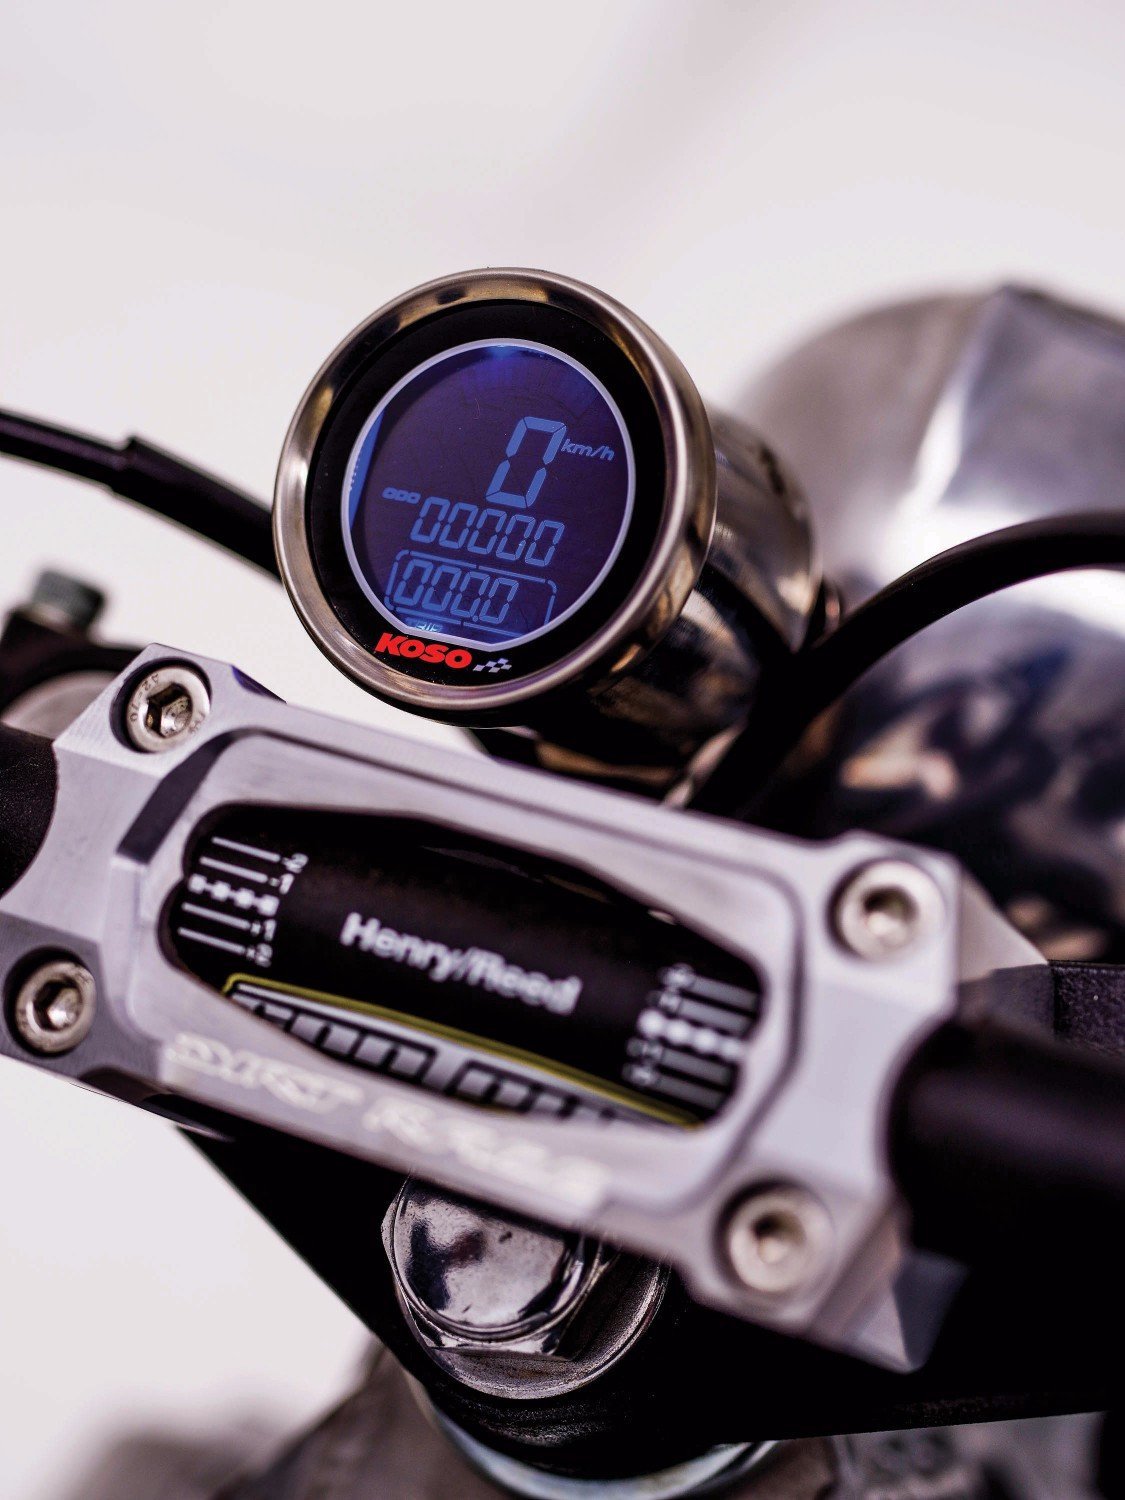 Honda VFR400 Tracker #28 - TheArsenale